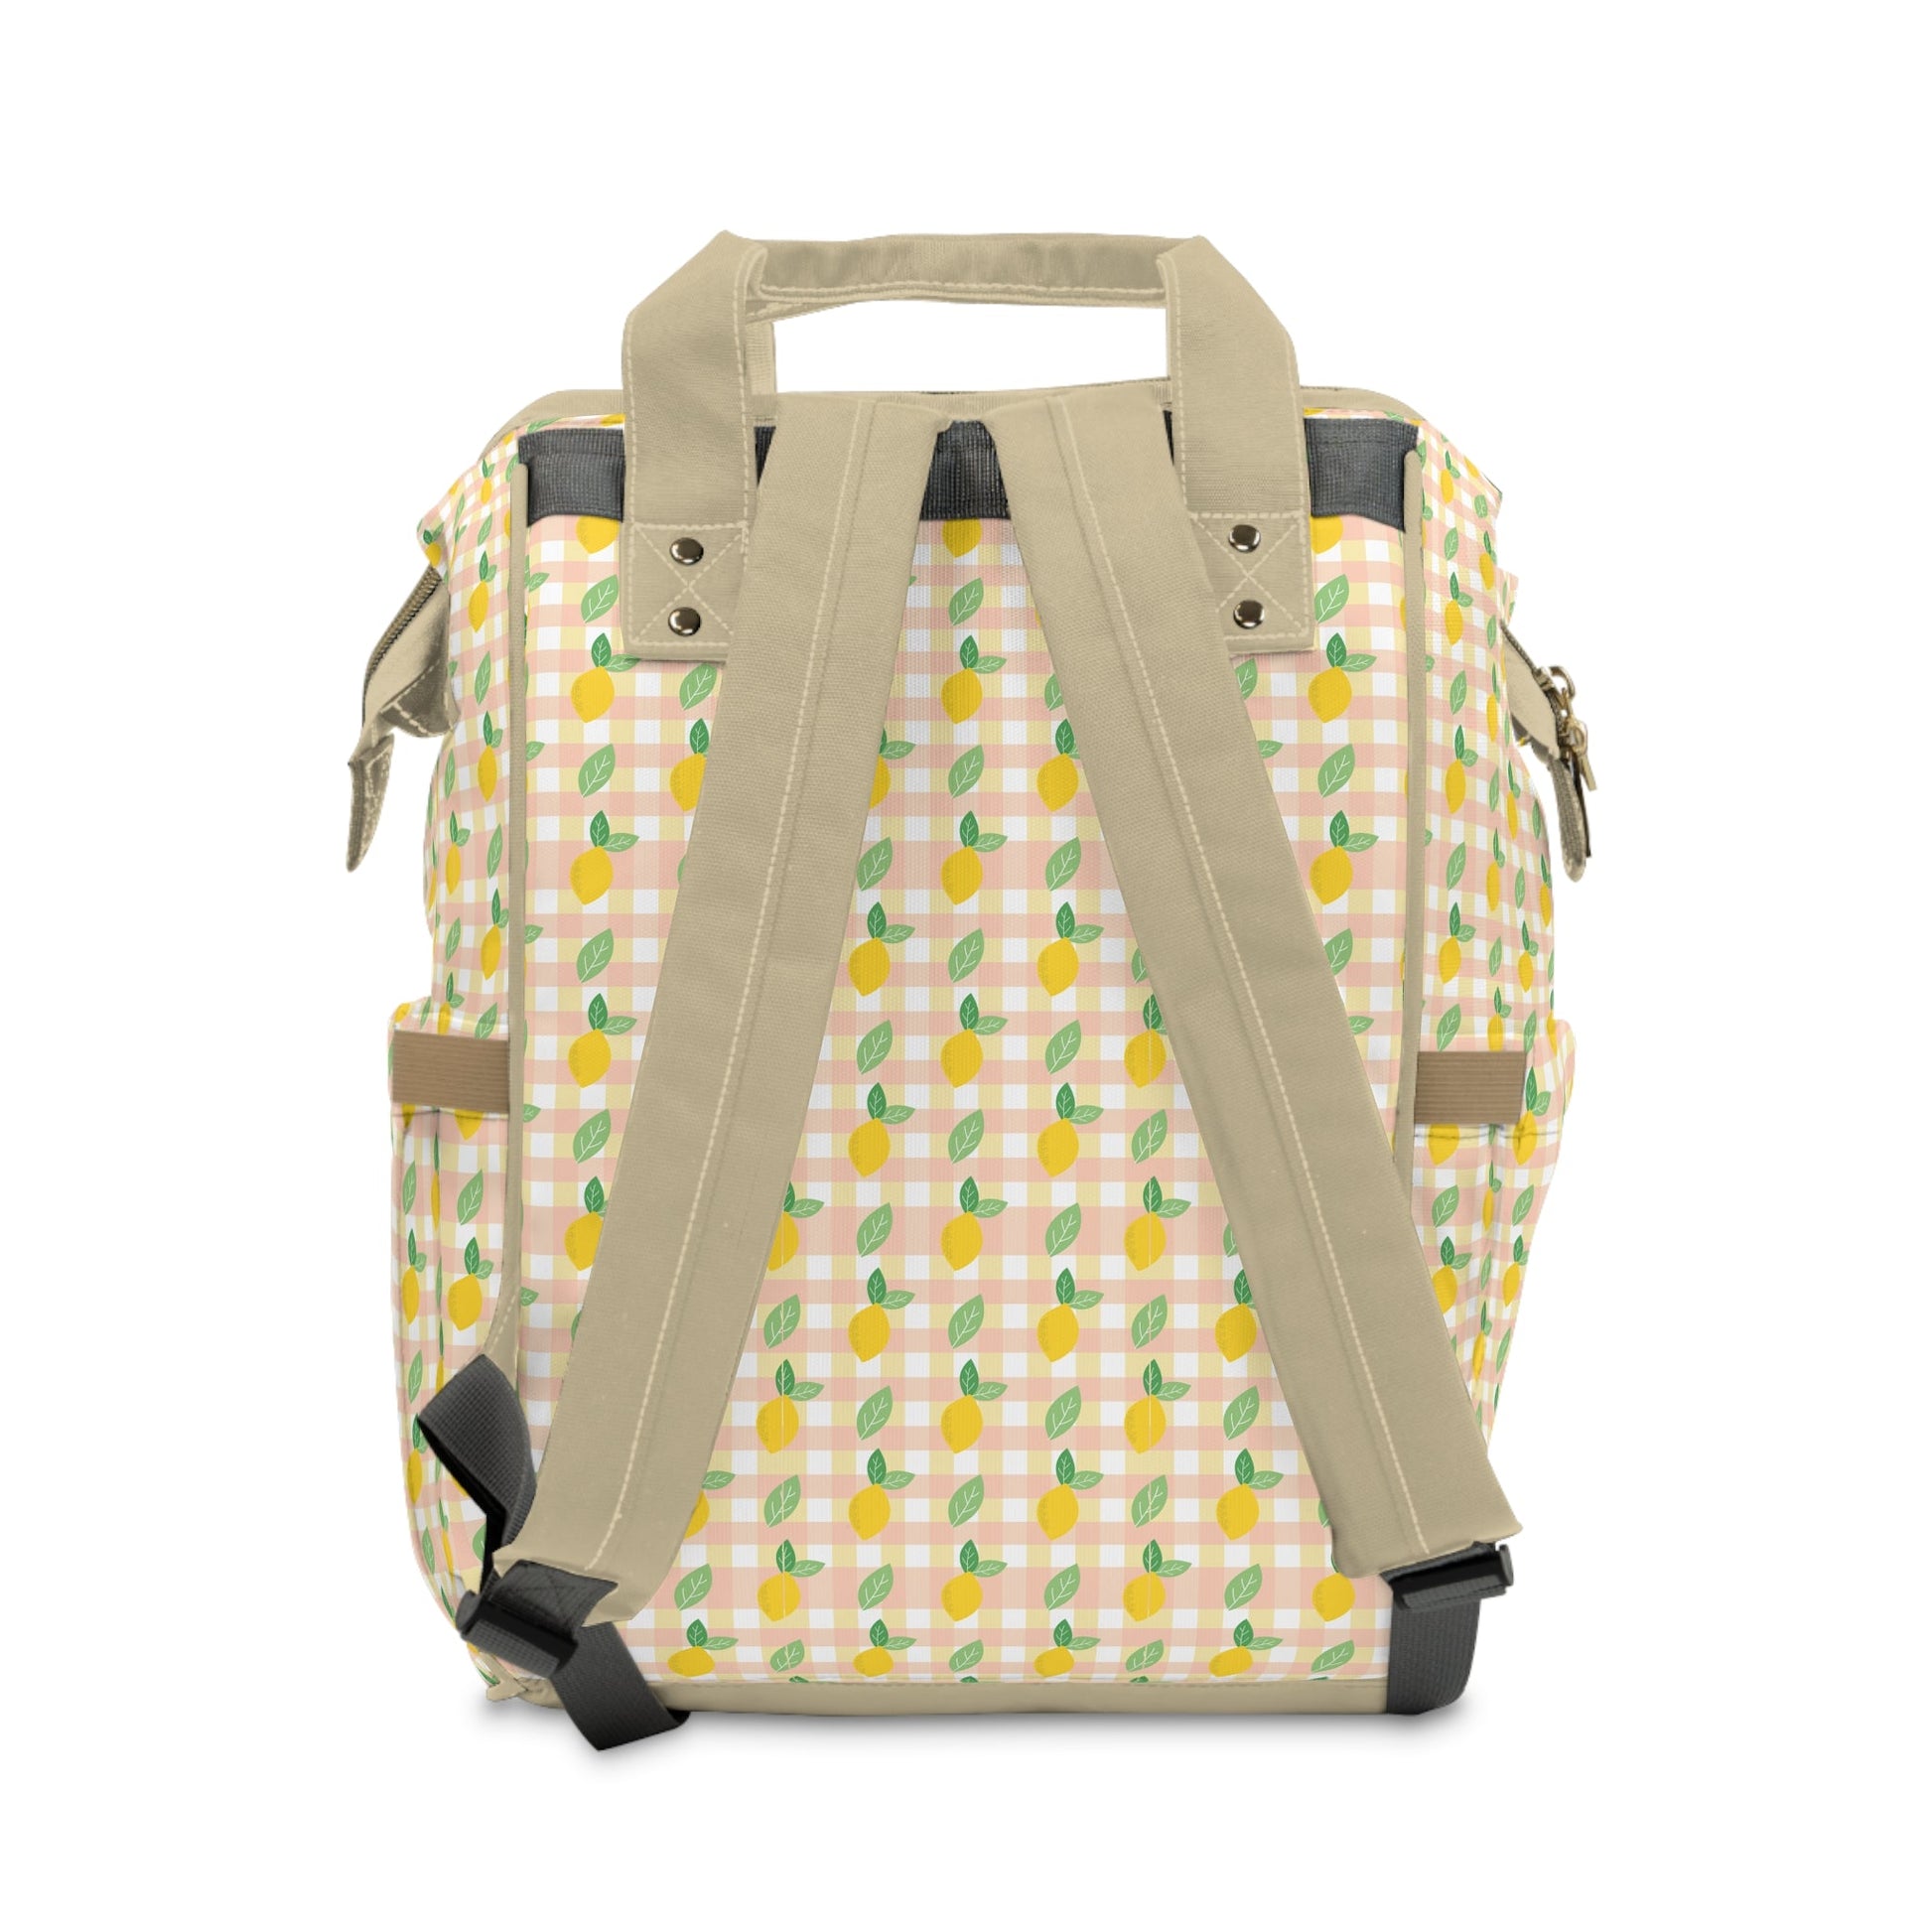 Backpack Bag in Checkered Lemons - Modern Kastle Shop